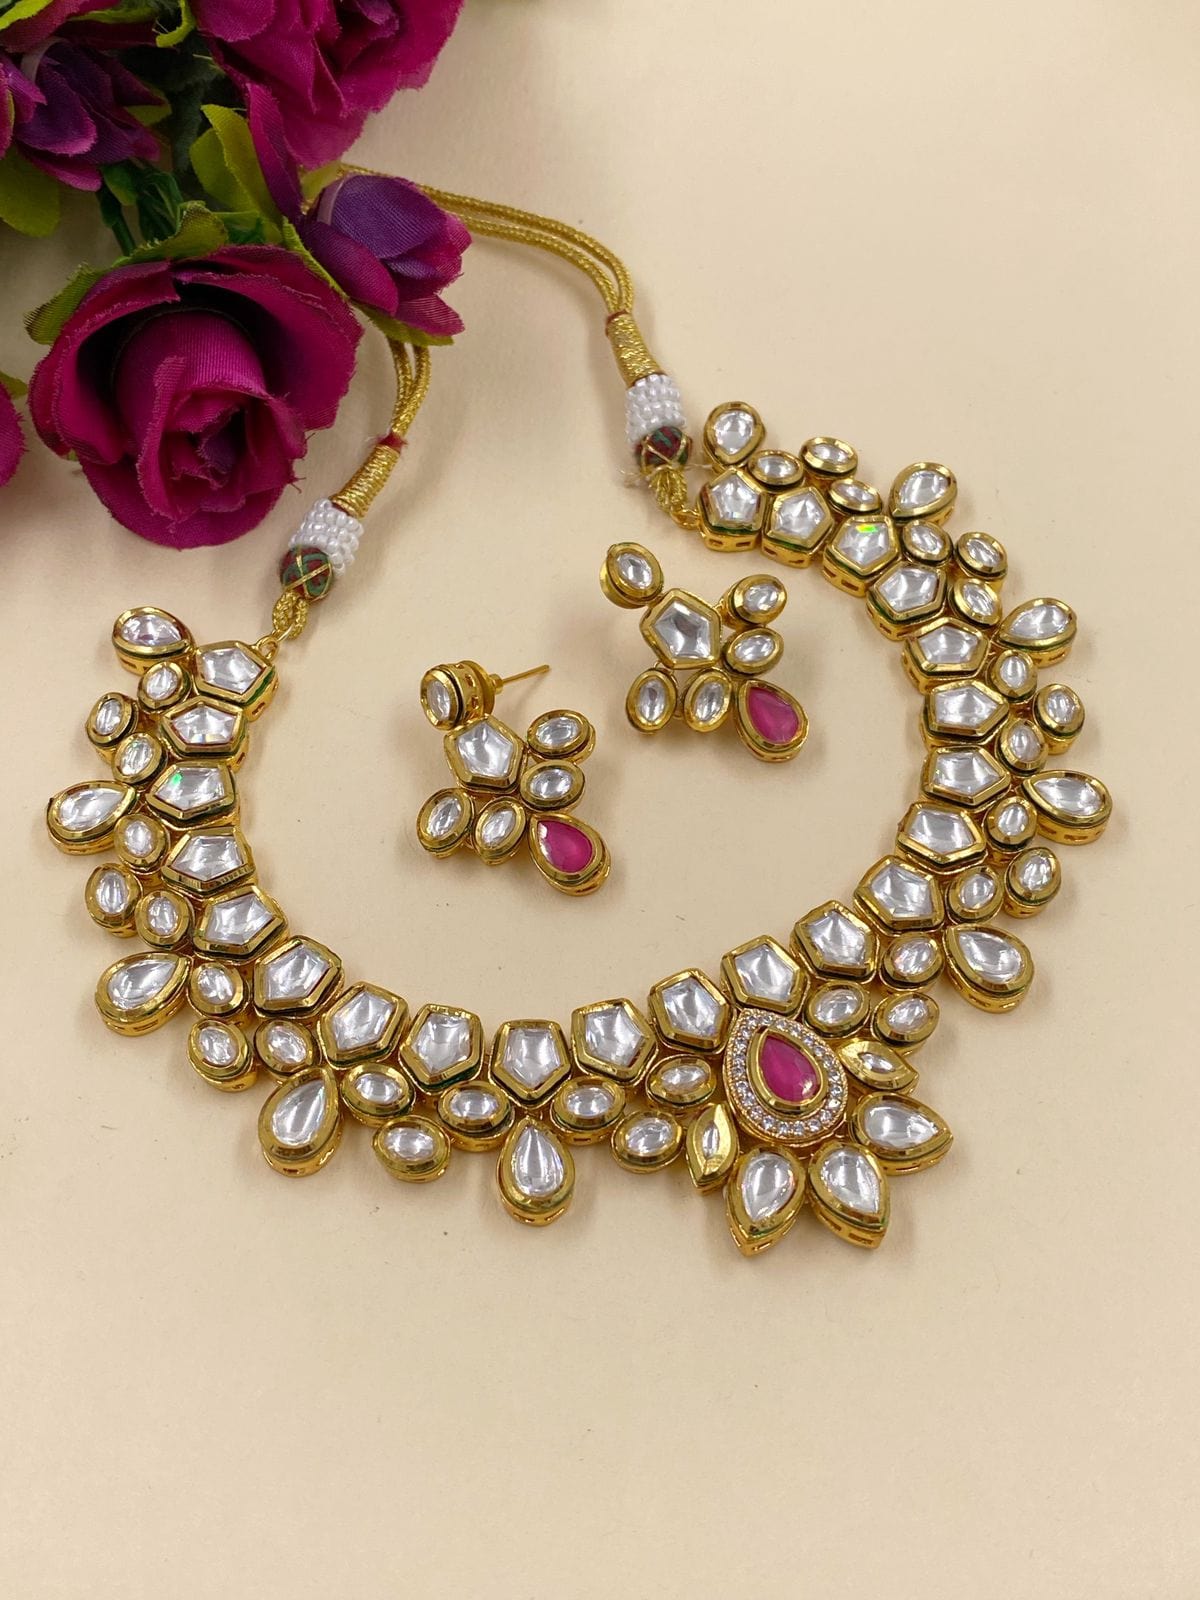 Lavanya Gold Plated Ladies Kundan Jewellery Necklace Set By Gehna Shop Kundan Necklace Sets